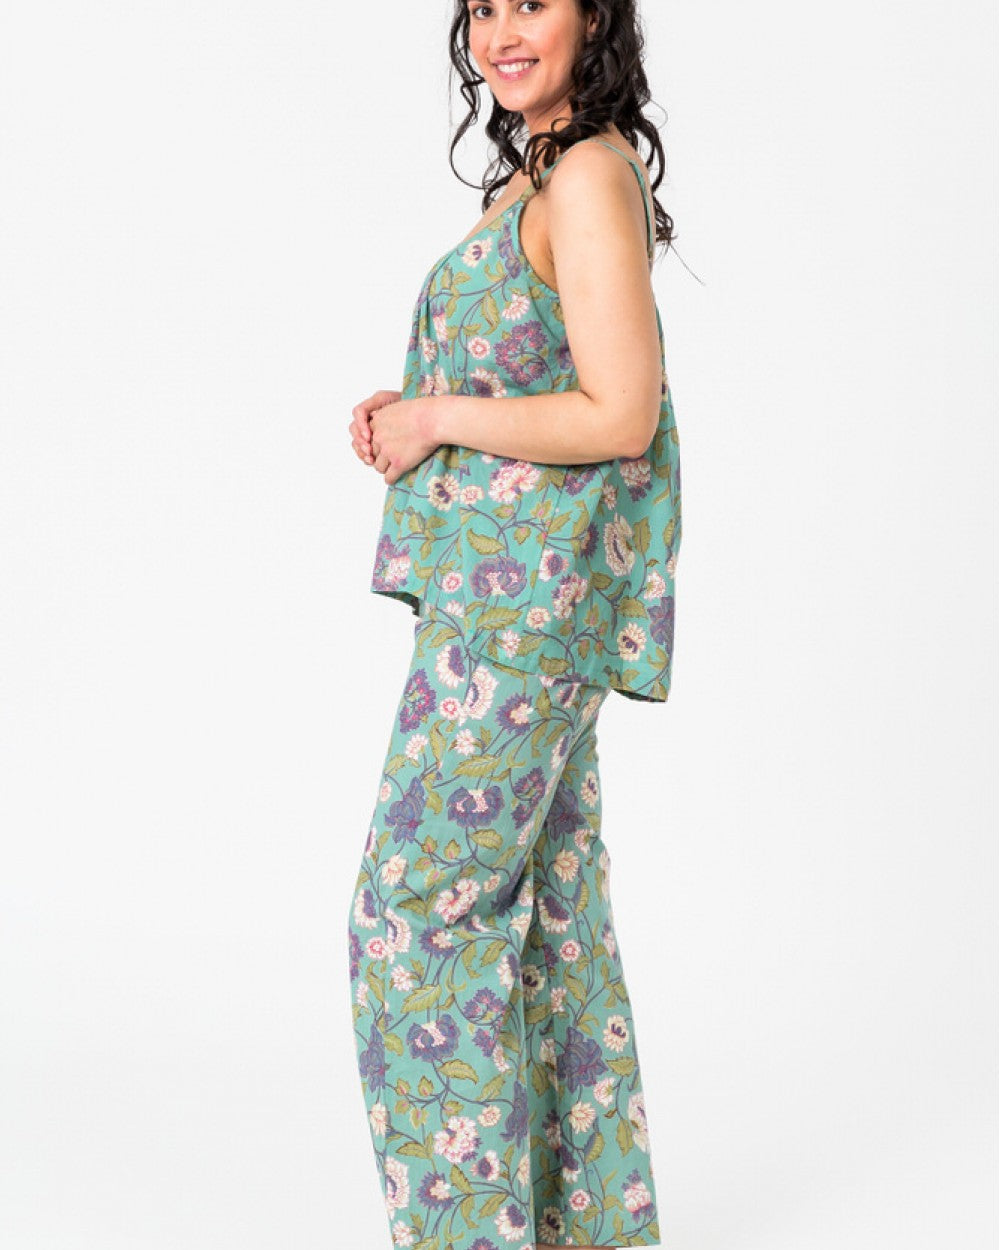 Lily aqua cotton camisole pyjama top from Floressents